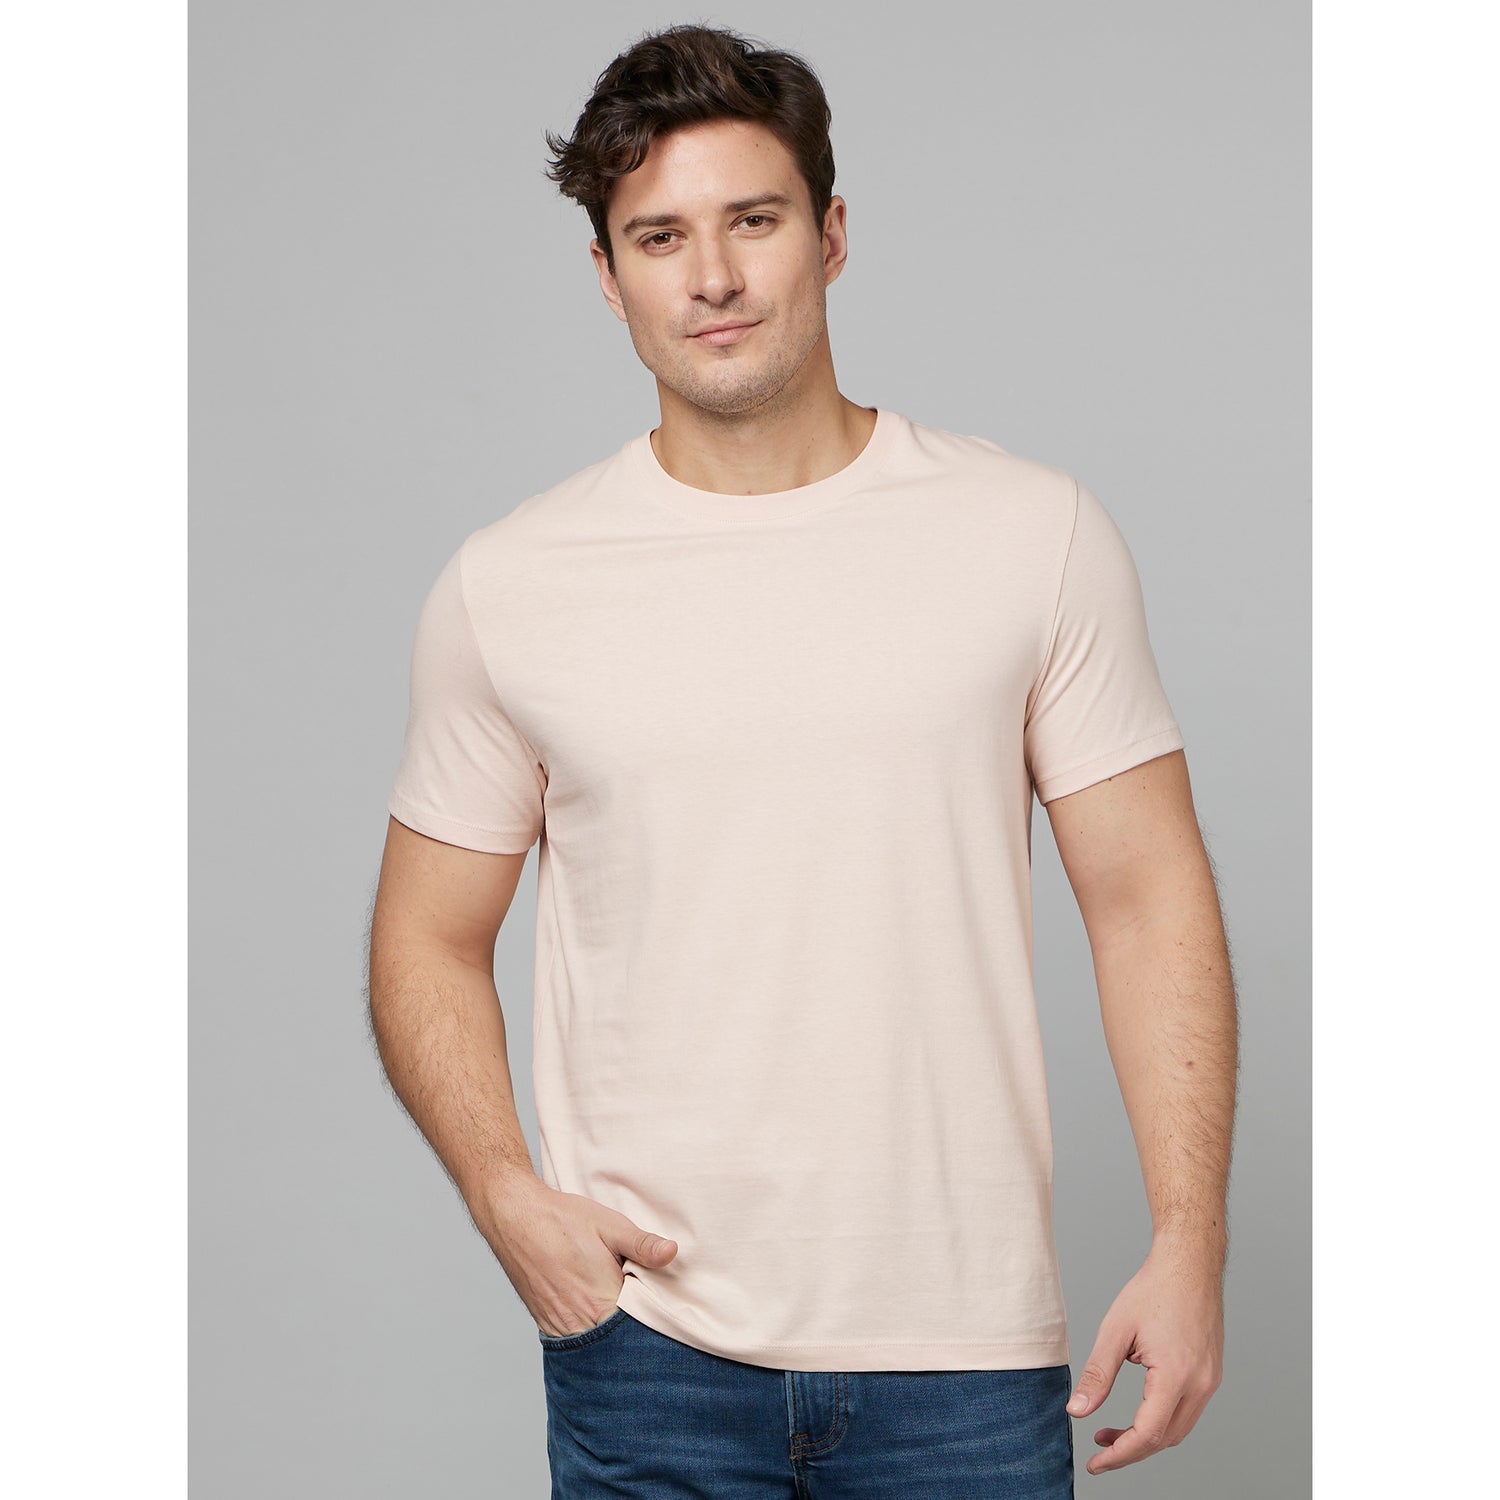 Dusty Pink Round Neck Regular Fit Cotton T-shirt (TEBASE1)